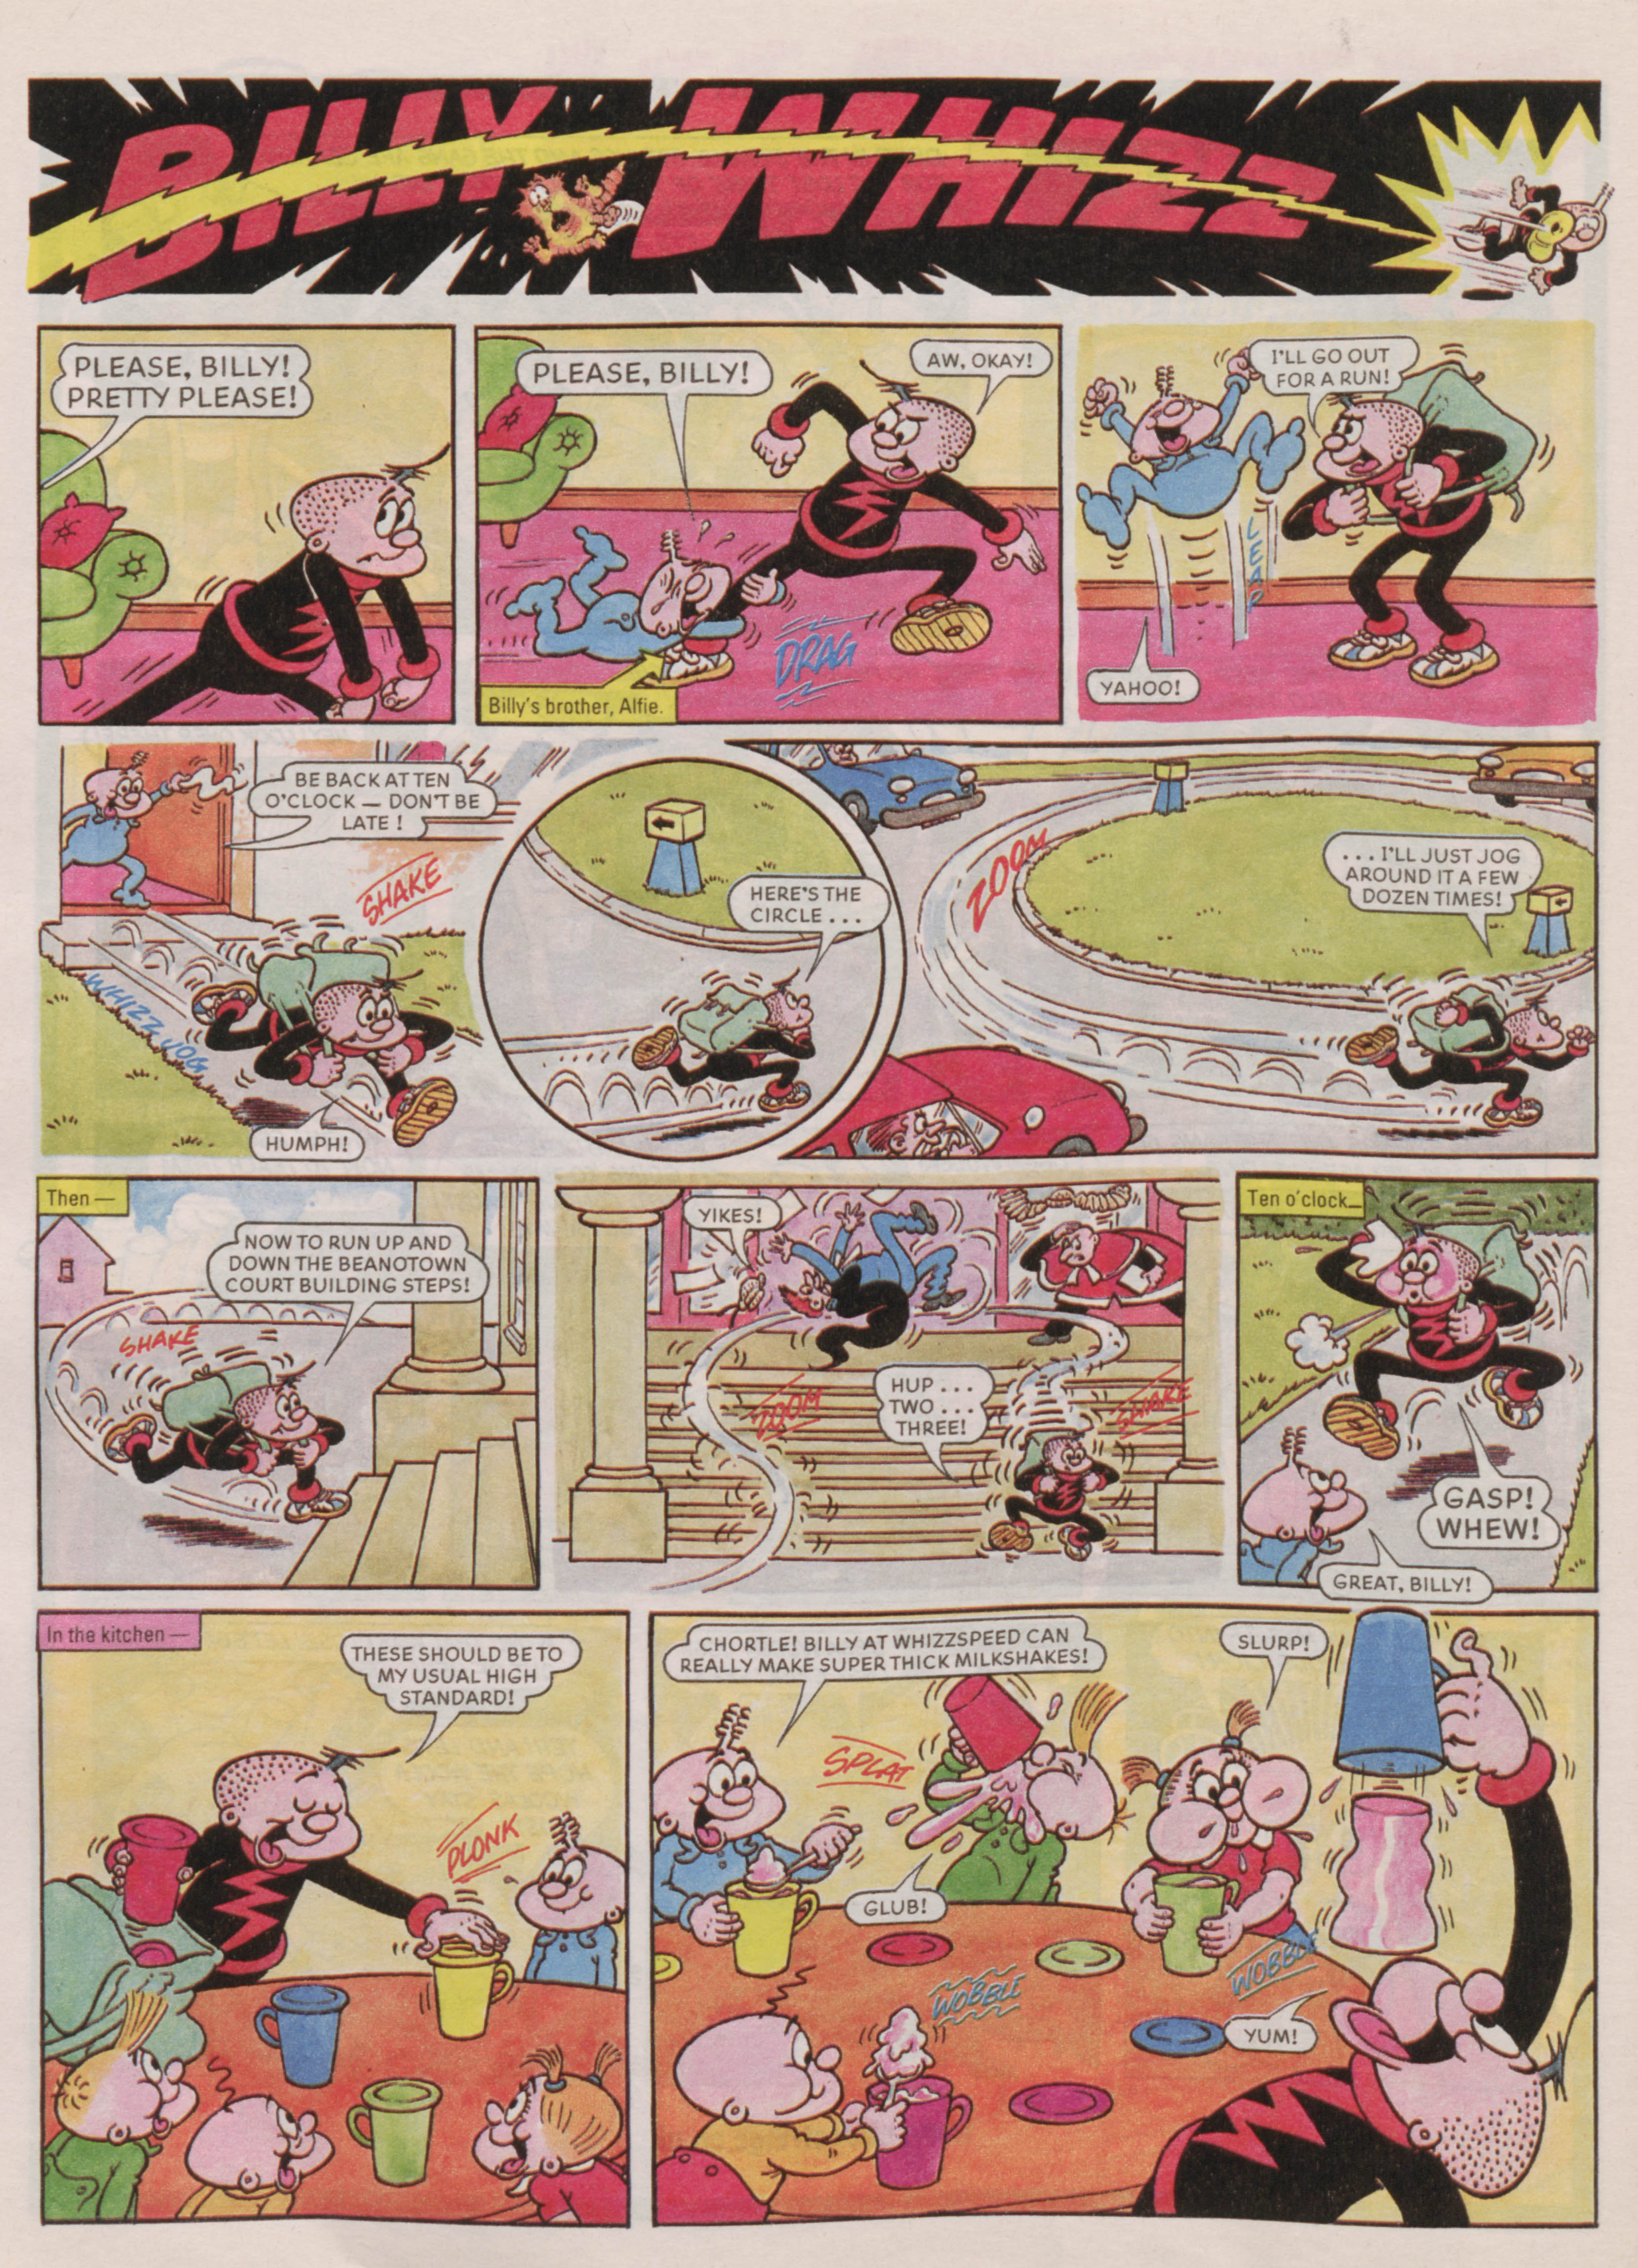 Beano Issue No. 2887 - 15th November 1997 - Billy Whizz - Ring-a-round-a-milkshake!